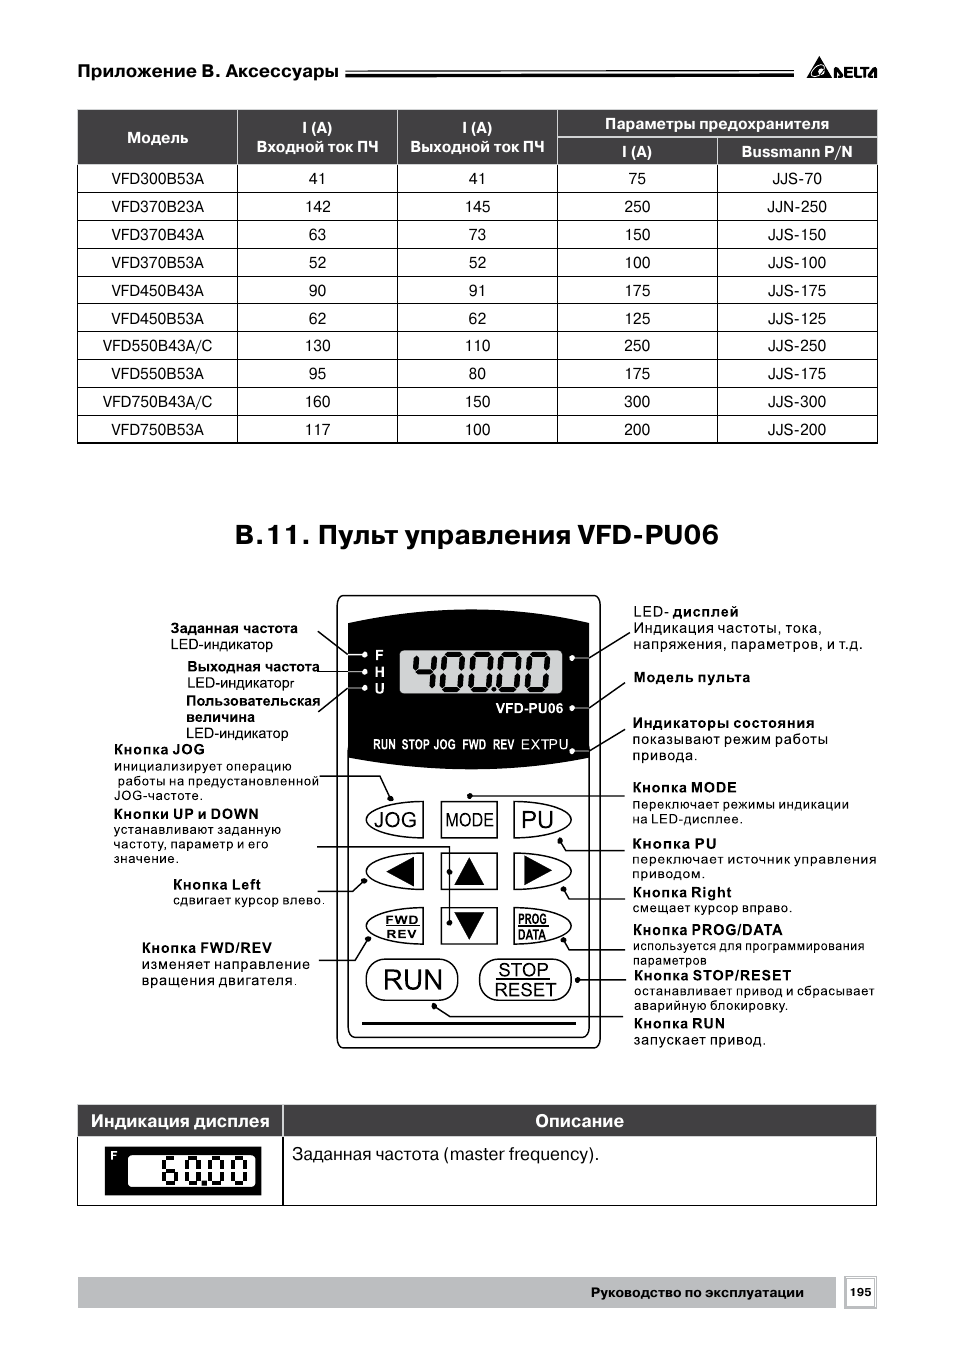 Frequency инструкция. Пульт управления VFD-pu01 Delta. Delta vfd022b43b. VFD мануал преобразователь частоты. VFD-pu06.